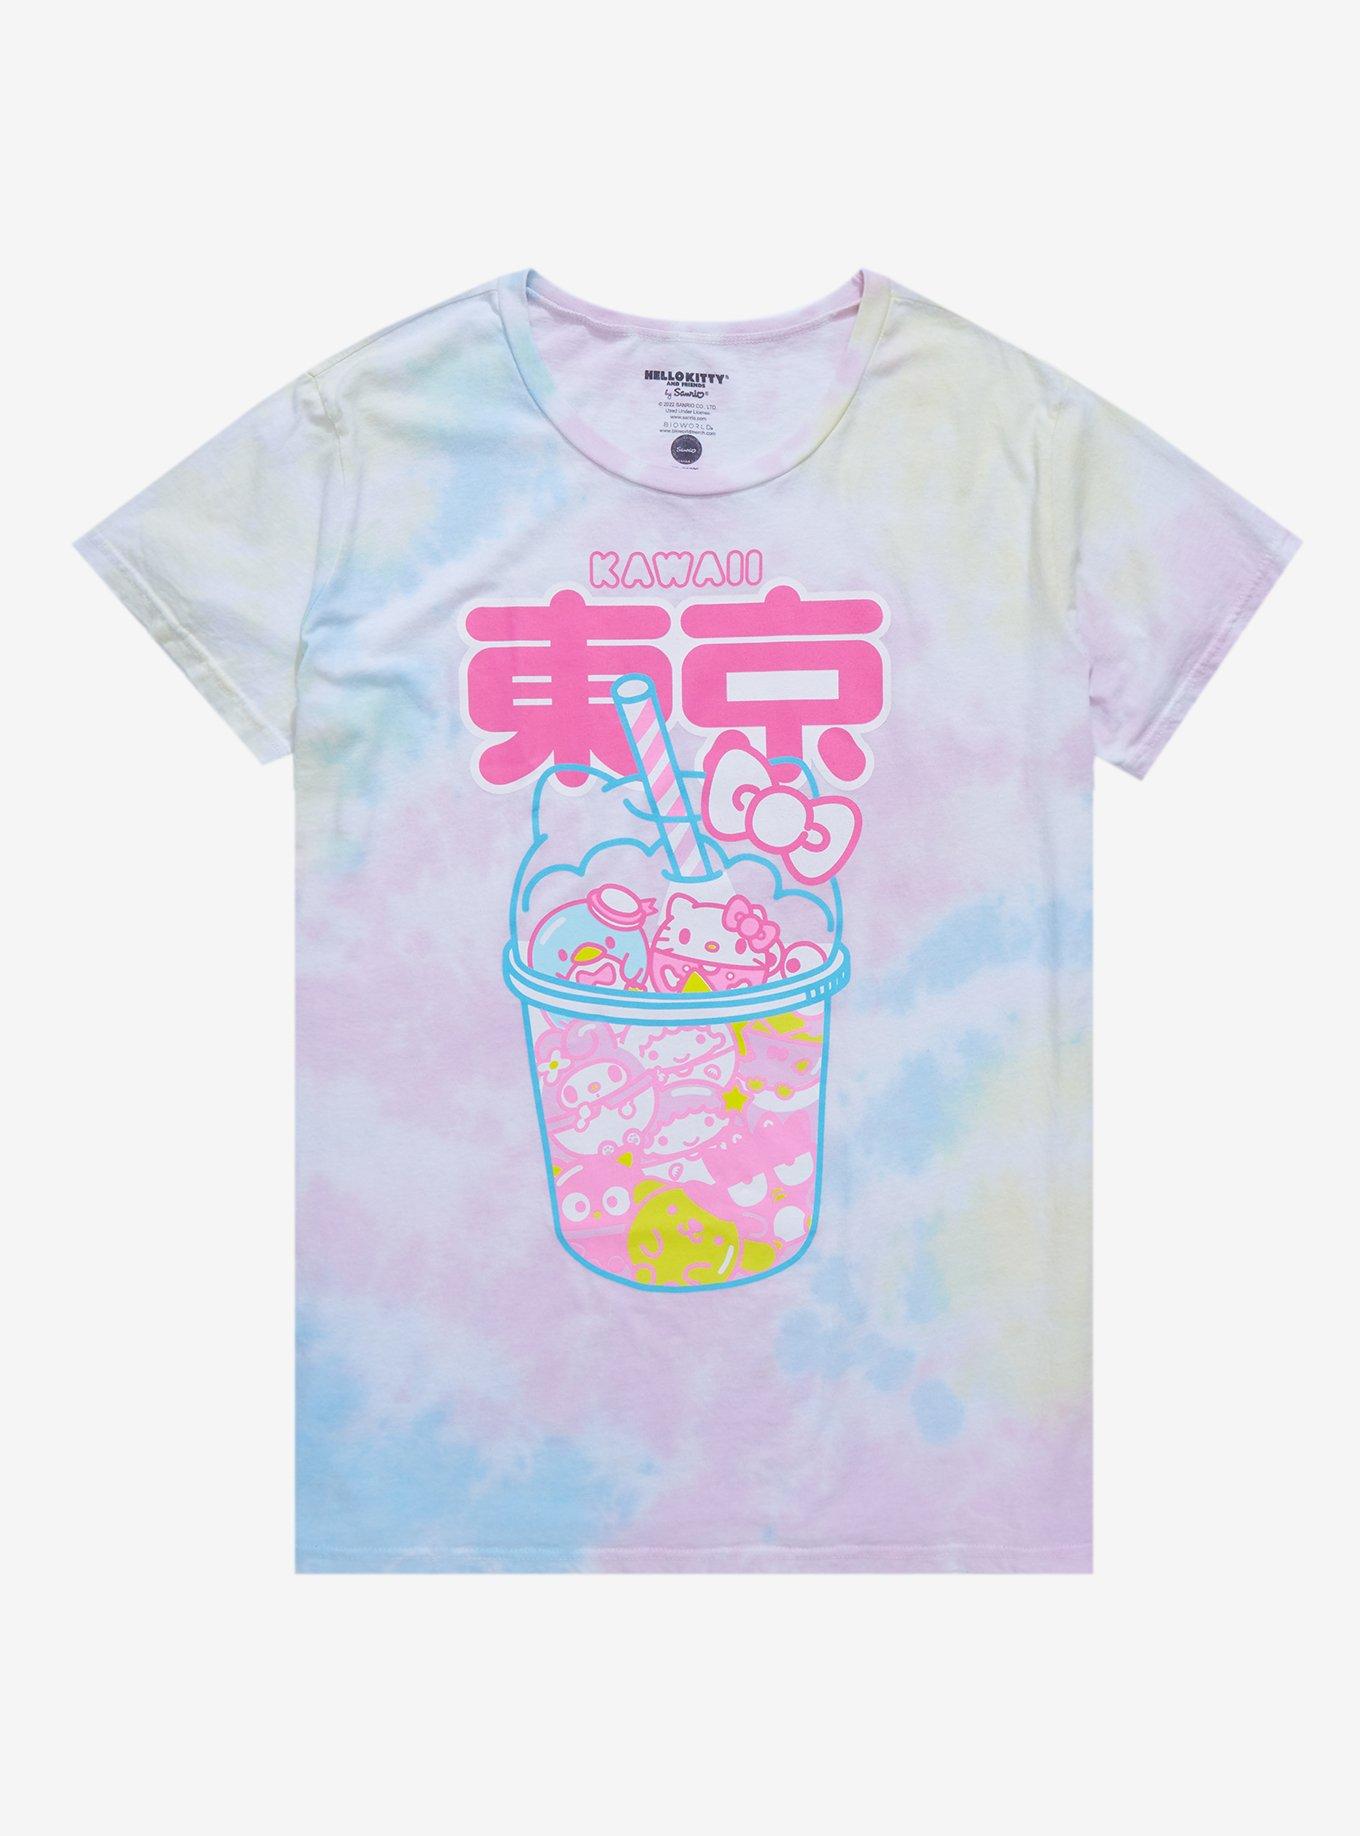 Hot Topic Hello Kitty And Friends Rainbow Checkered Tie-Dye Boyfriend Fit  Girls T-Shirt